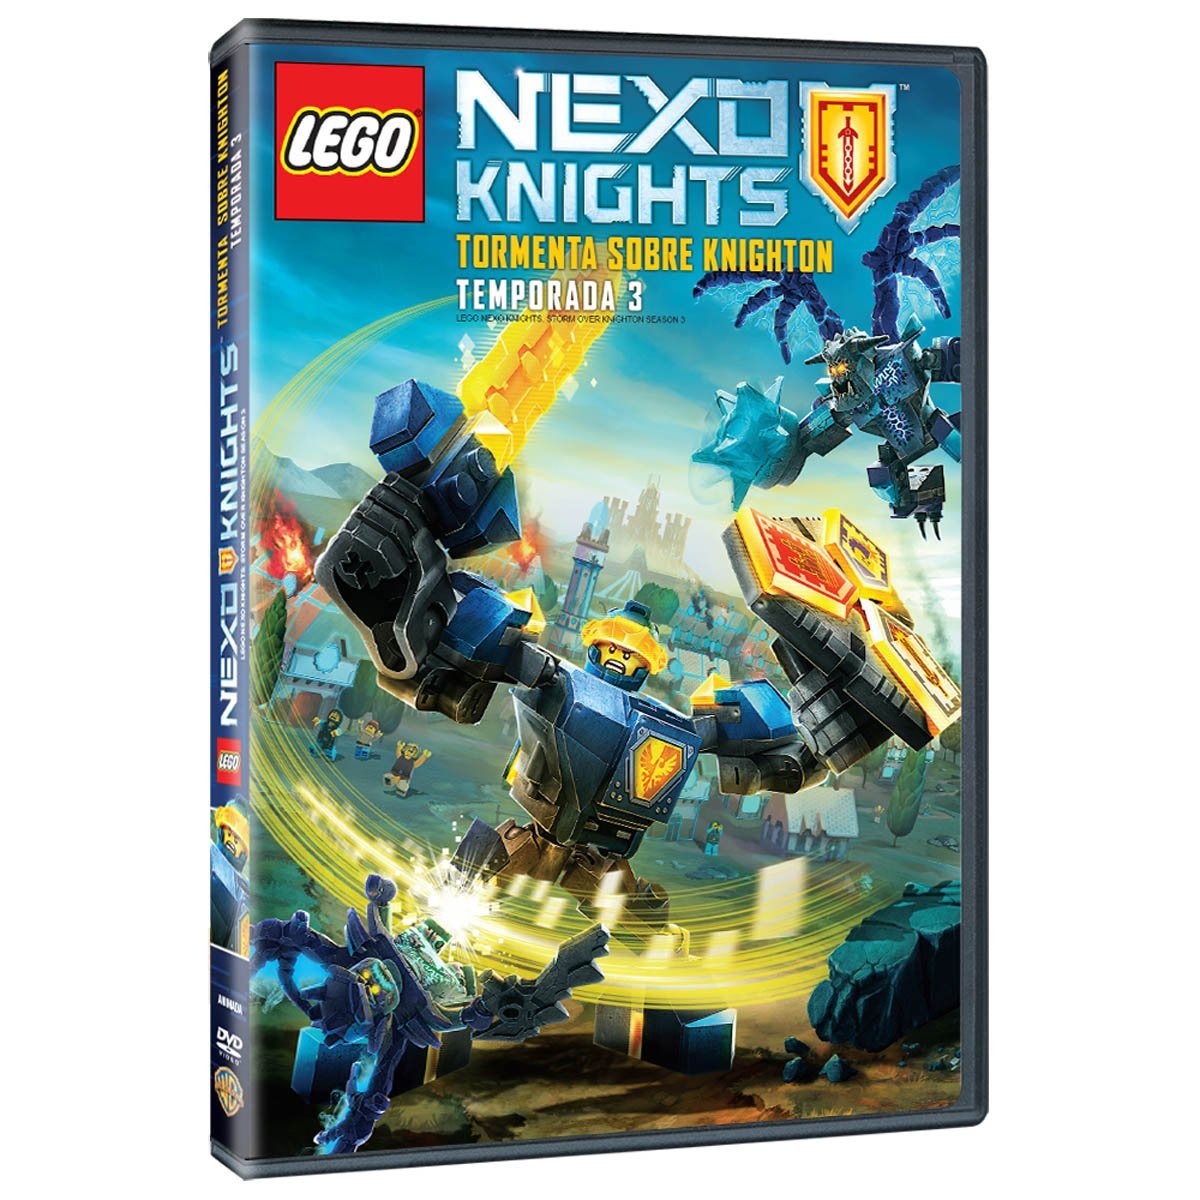 Dvd Lego Nexo Knights Tormenta en Knighton - Temporada 3